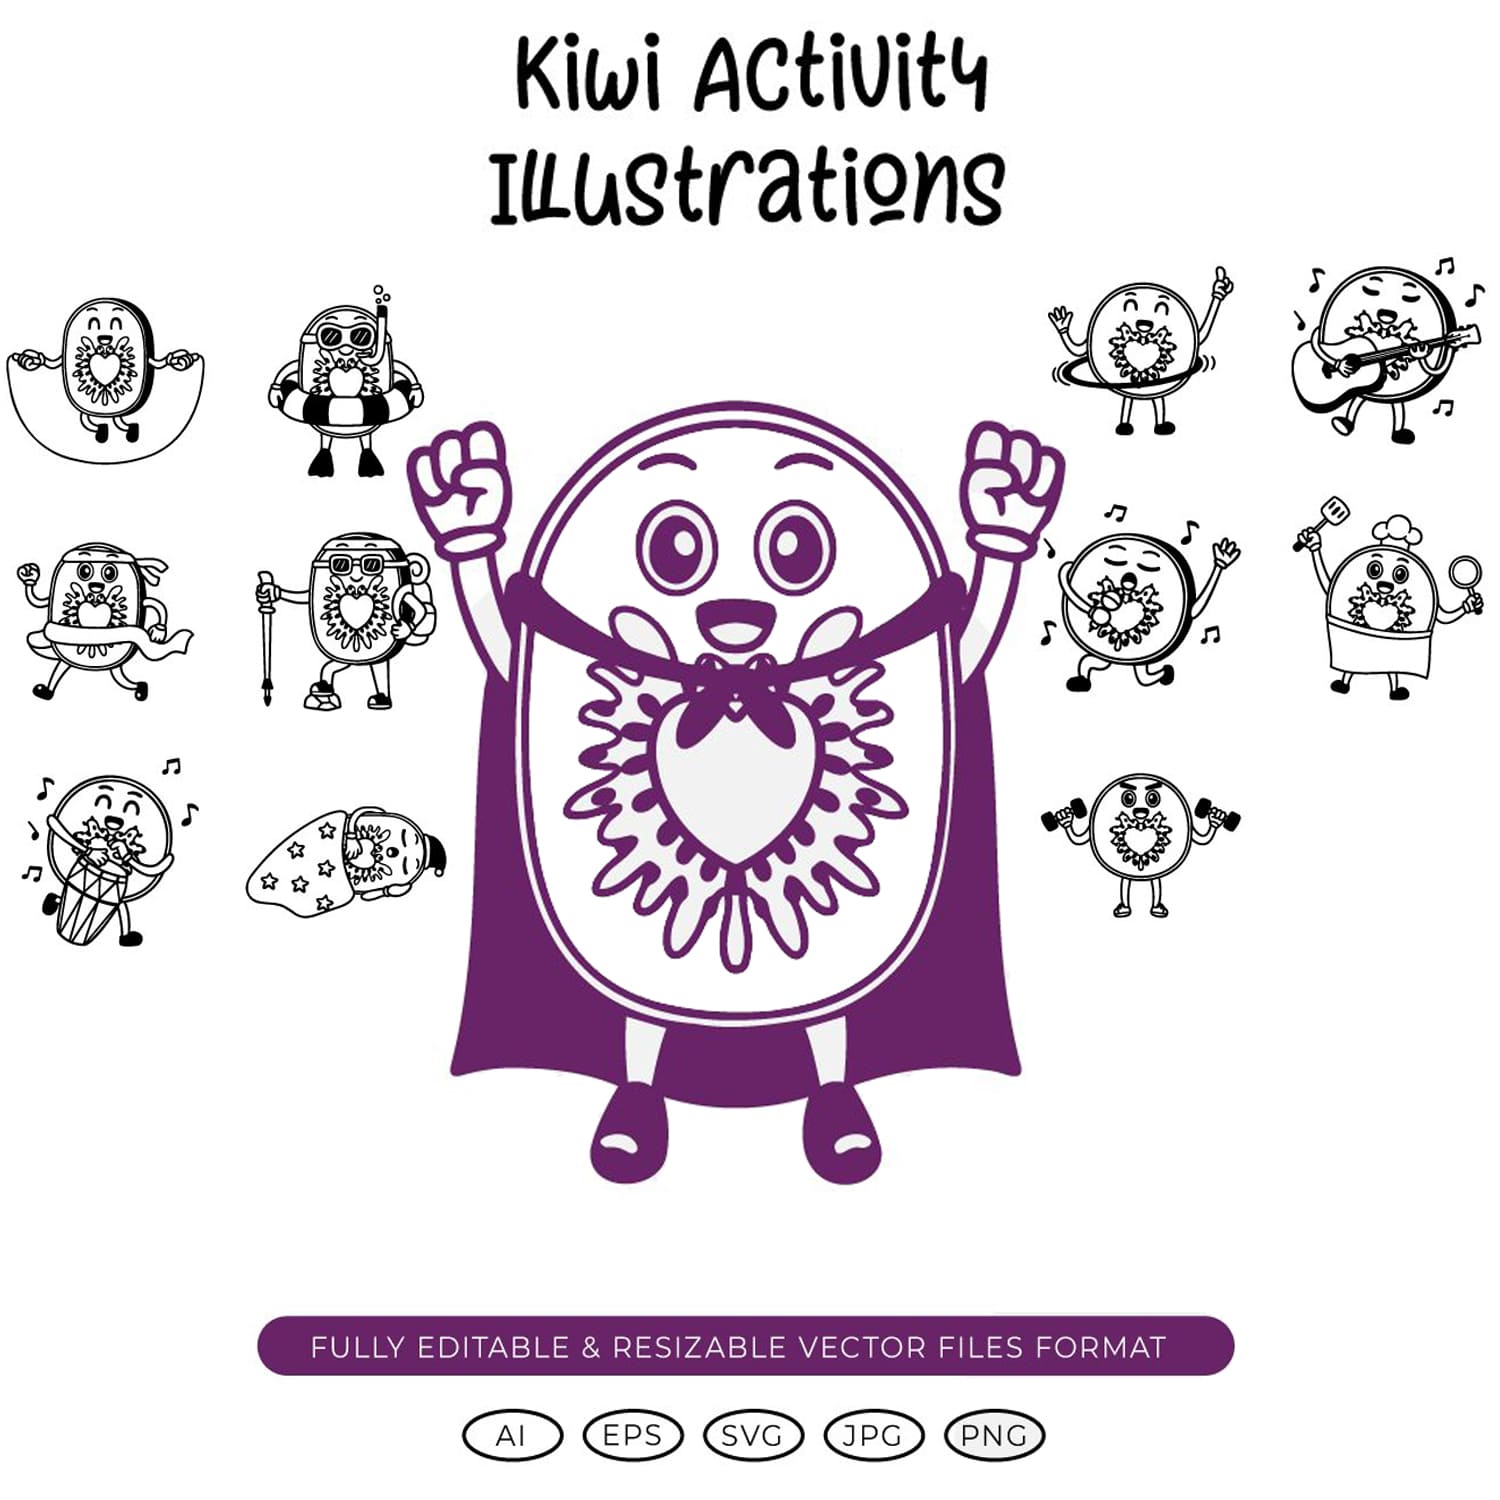 Kiwi Activity Illustrations cover.